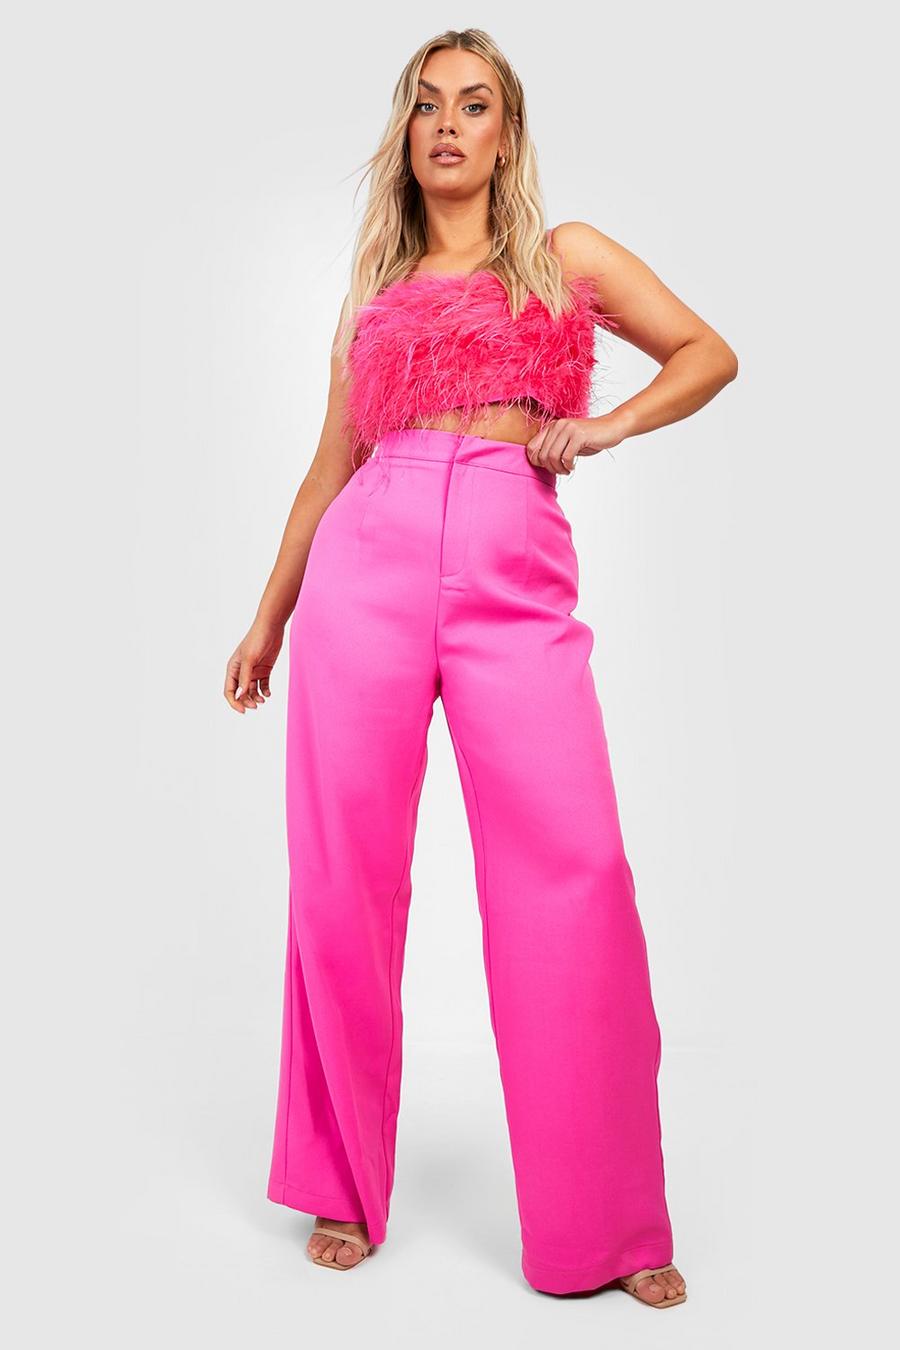 Pantaloni sartoriali Plus Size, Hot pink image number 1